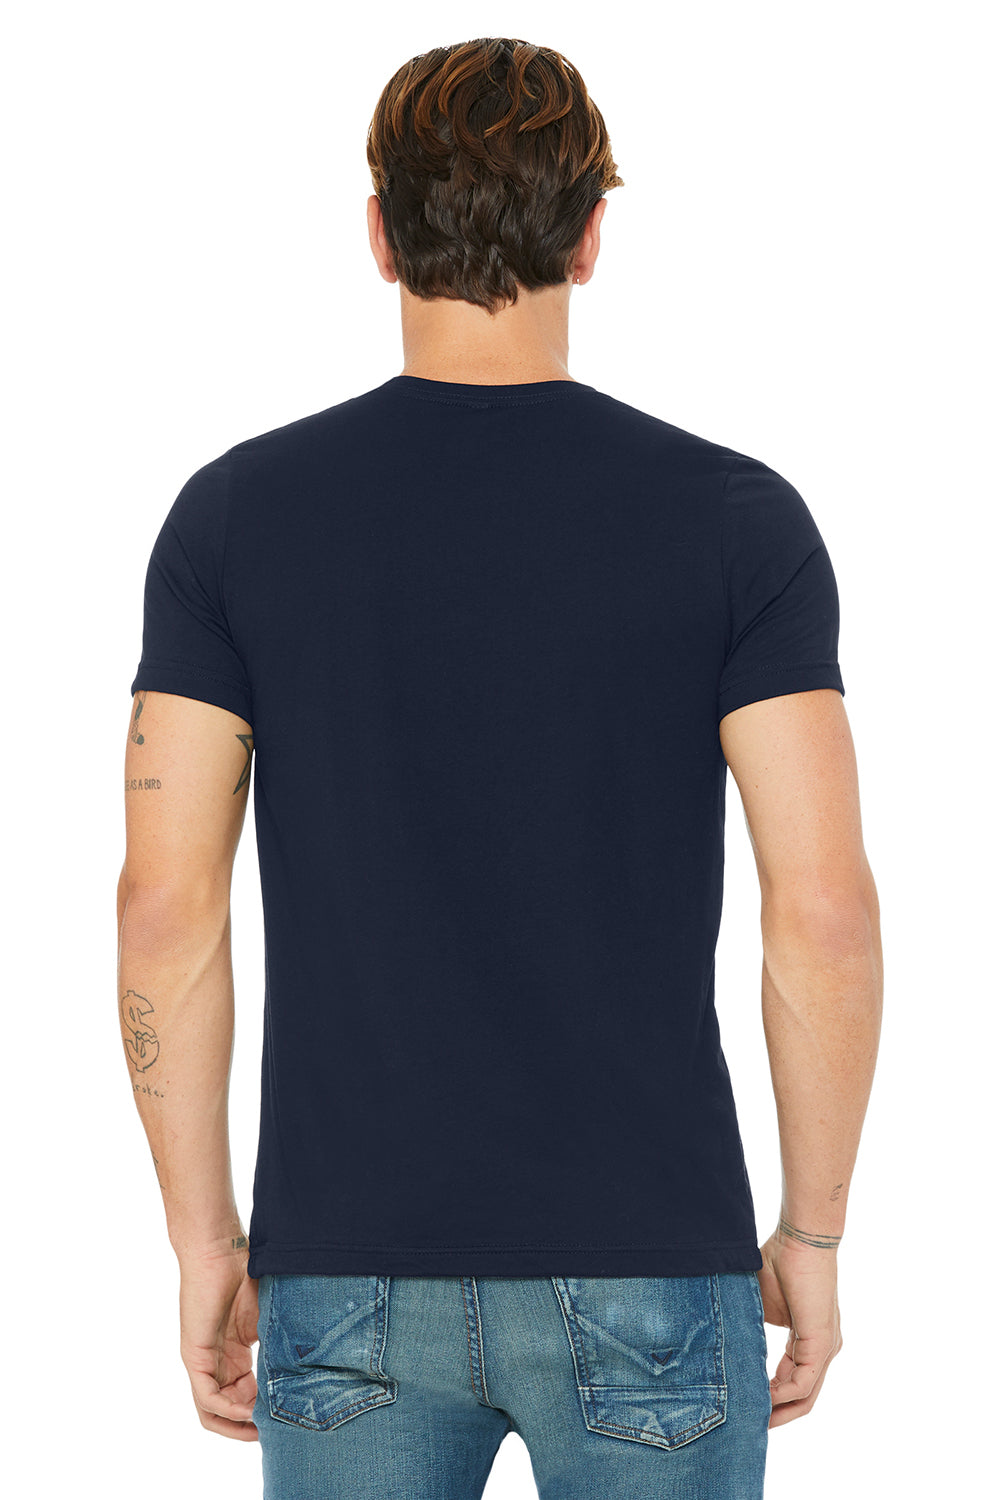 Bella + Canvas 3650 Mens Short Sleeve Crewneck T-Shirt Navy Blue Back